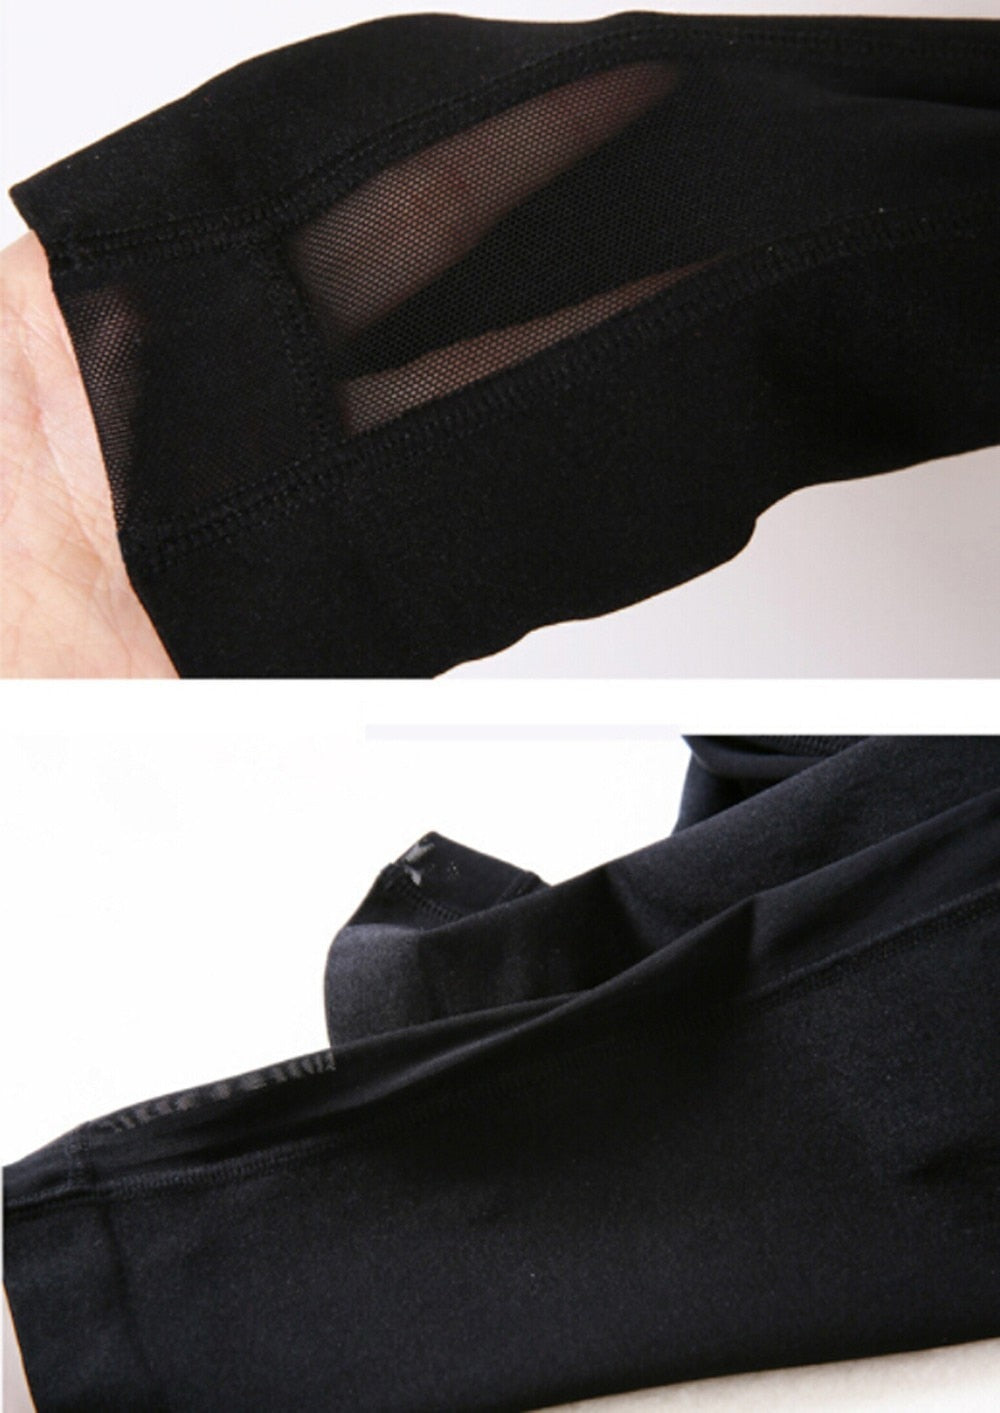 Women fitness black tights mesh leggings with pocket Pluscool sports